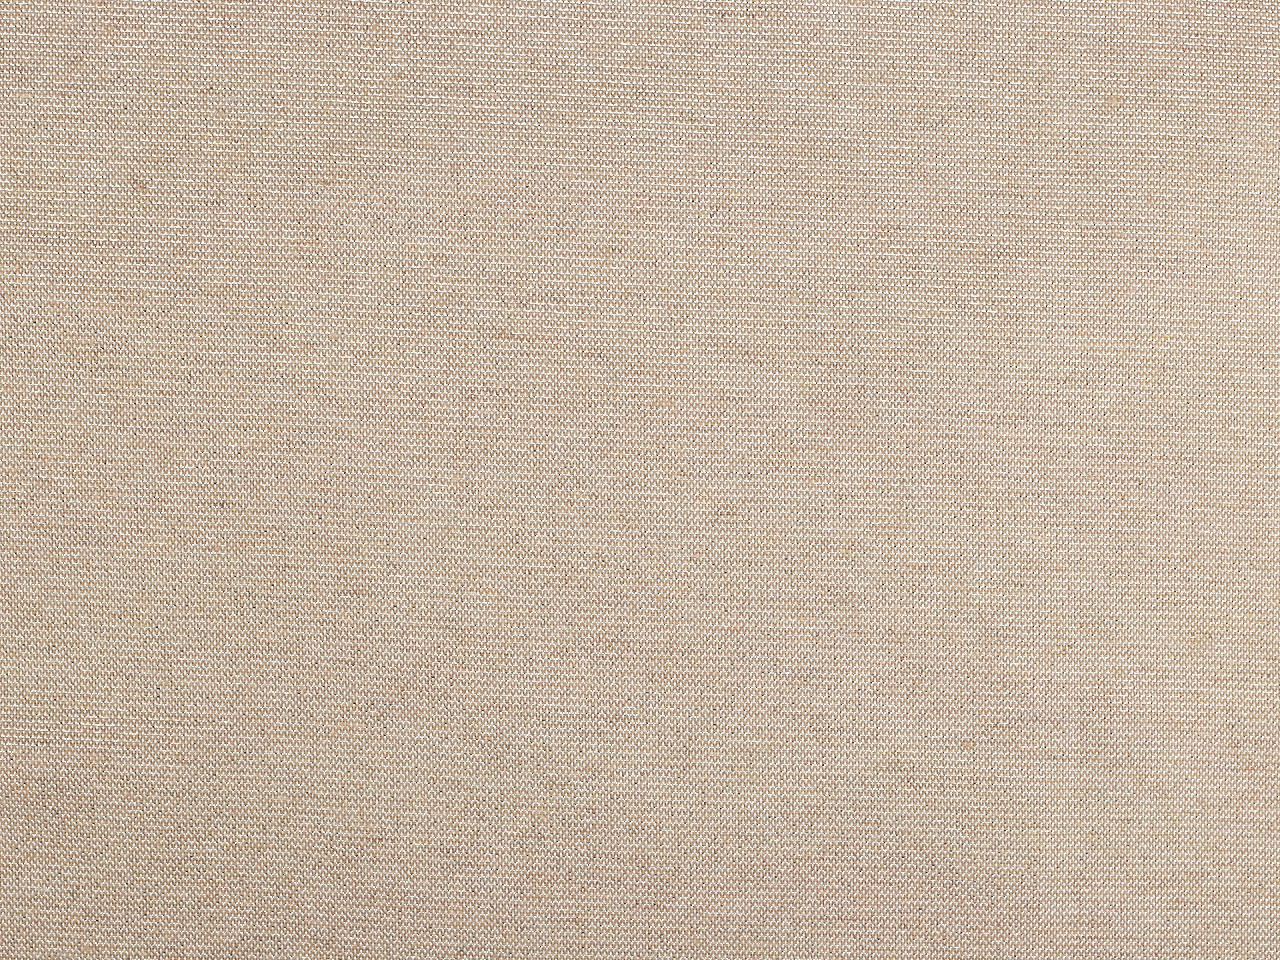 Dekorační látka Loneta s lurexem oboustranná, barva 3 režná stříbrná